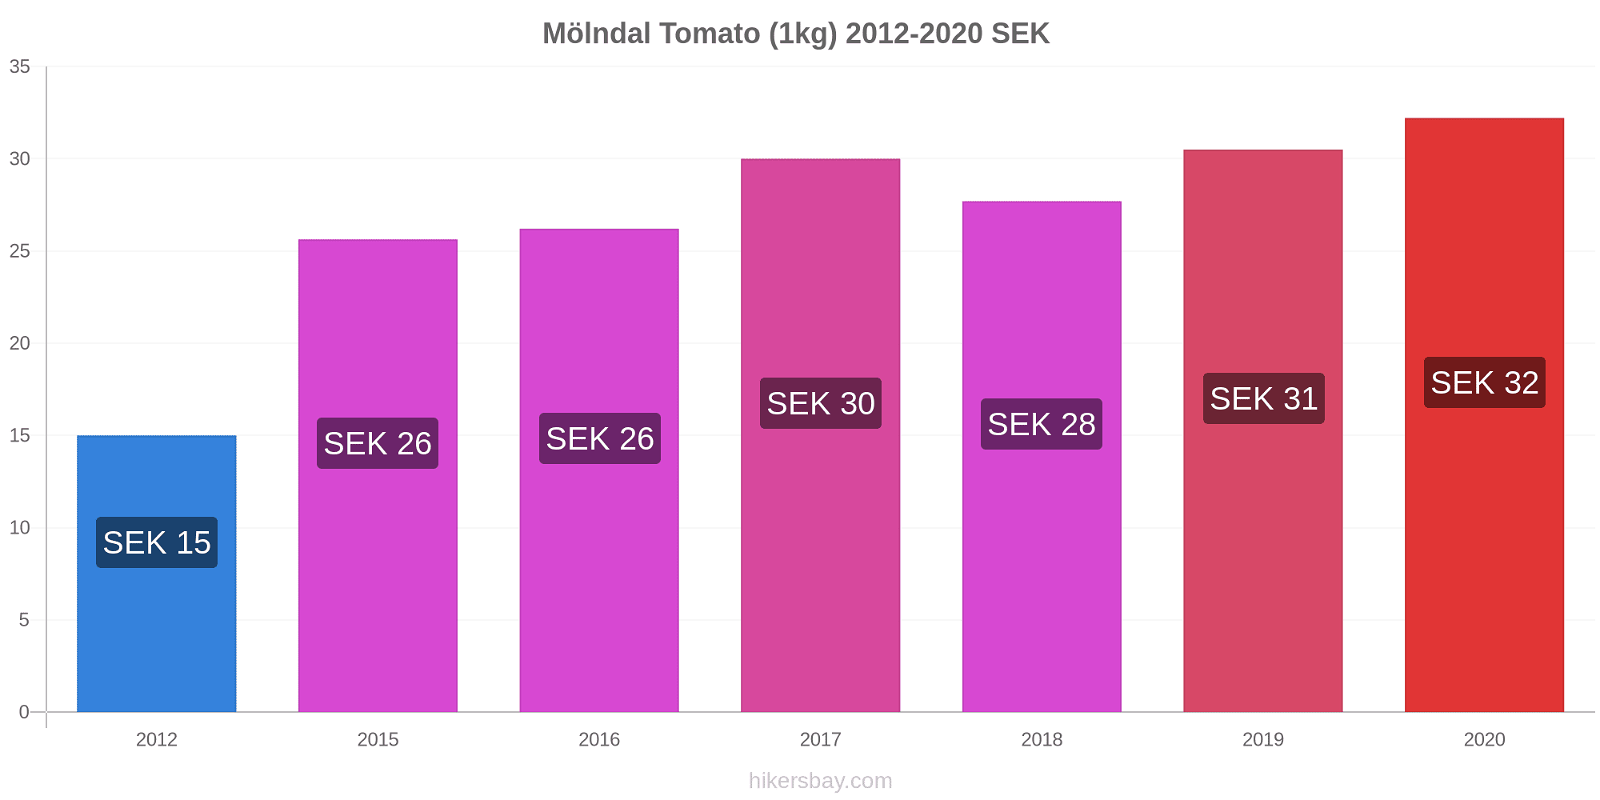 Mölndal price changes Tomato (1kg) hikersbay.com